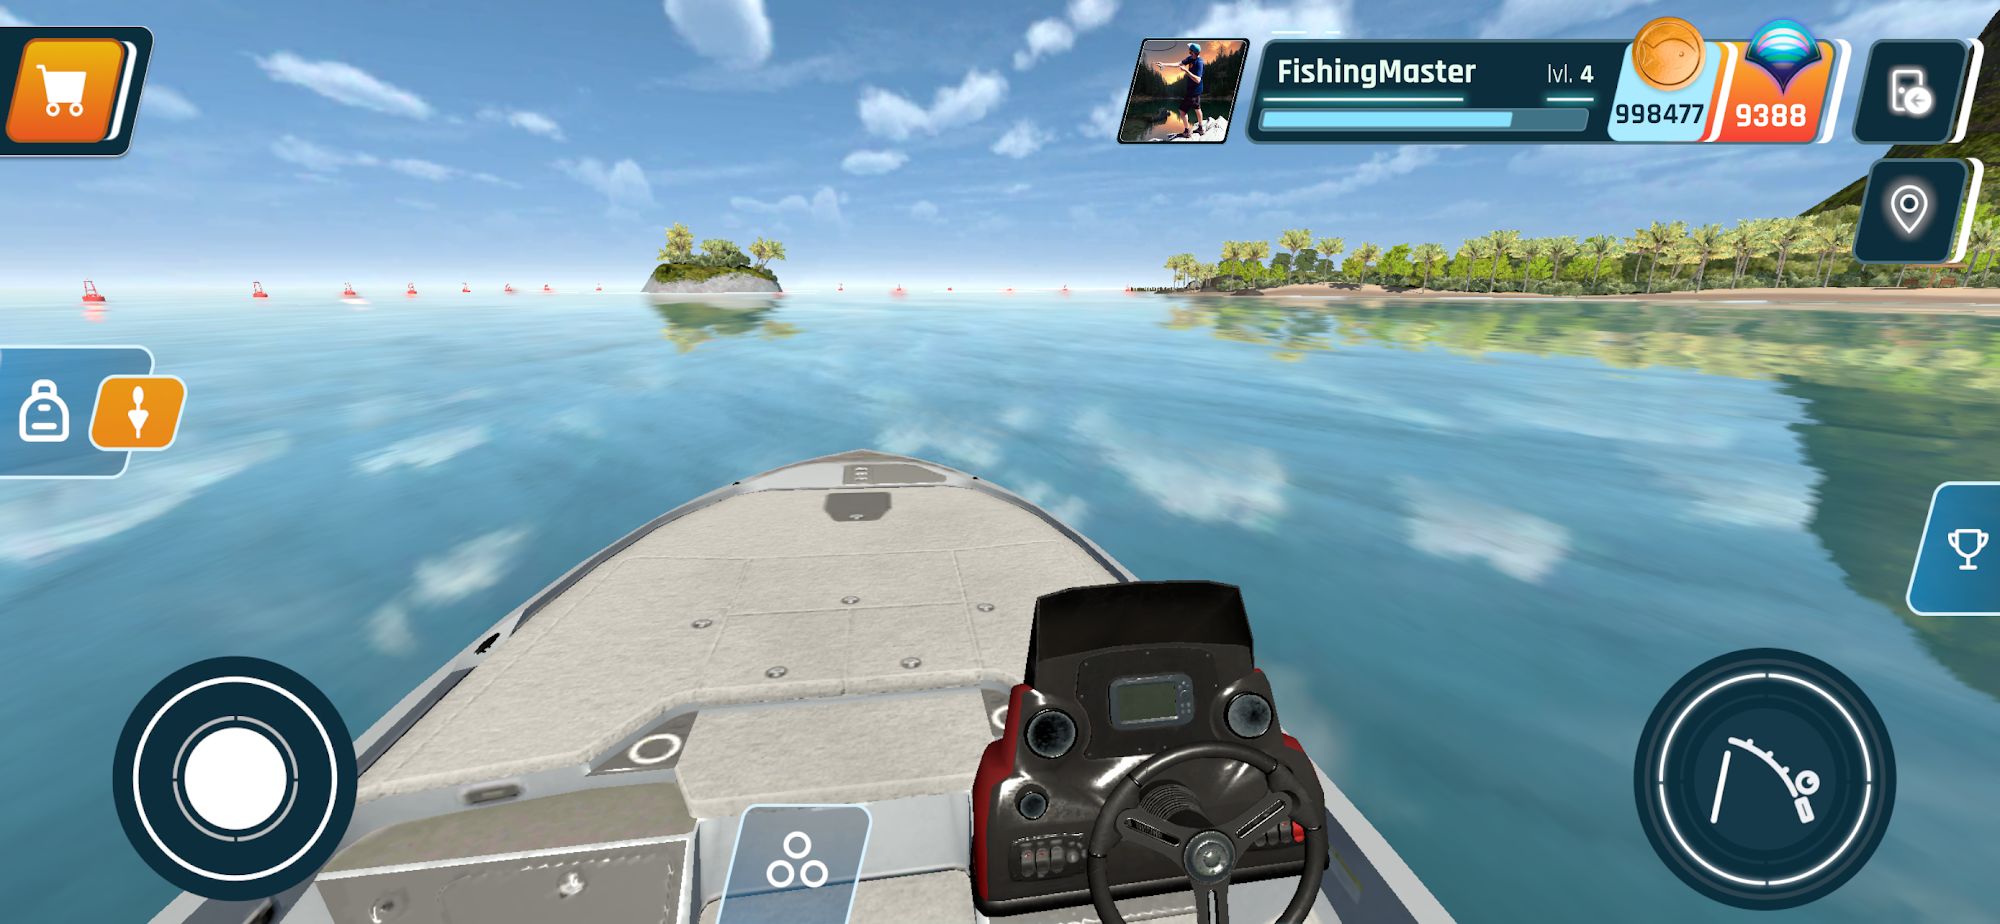 Скачать Ultimate Fishing Mobile: Android Рыбалка игра на телефон и планшет.